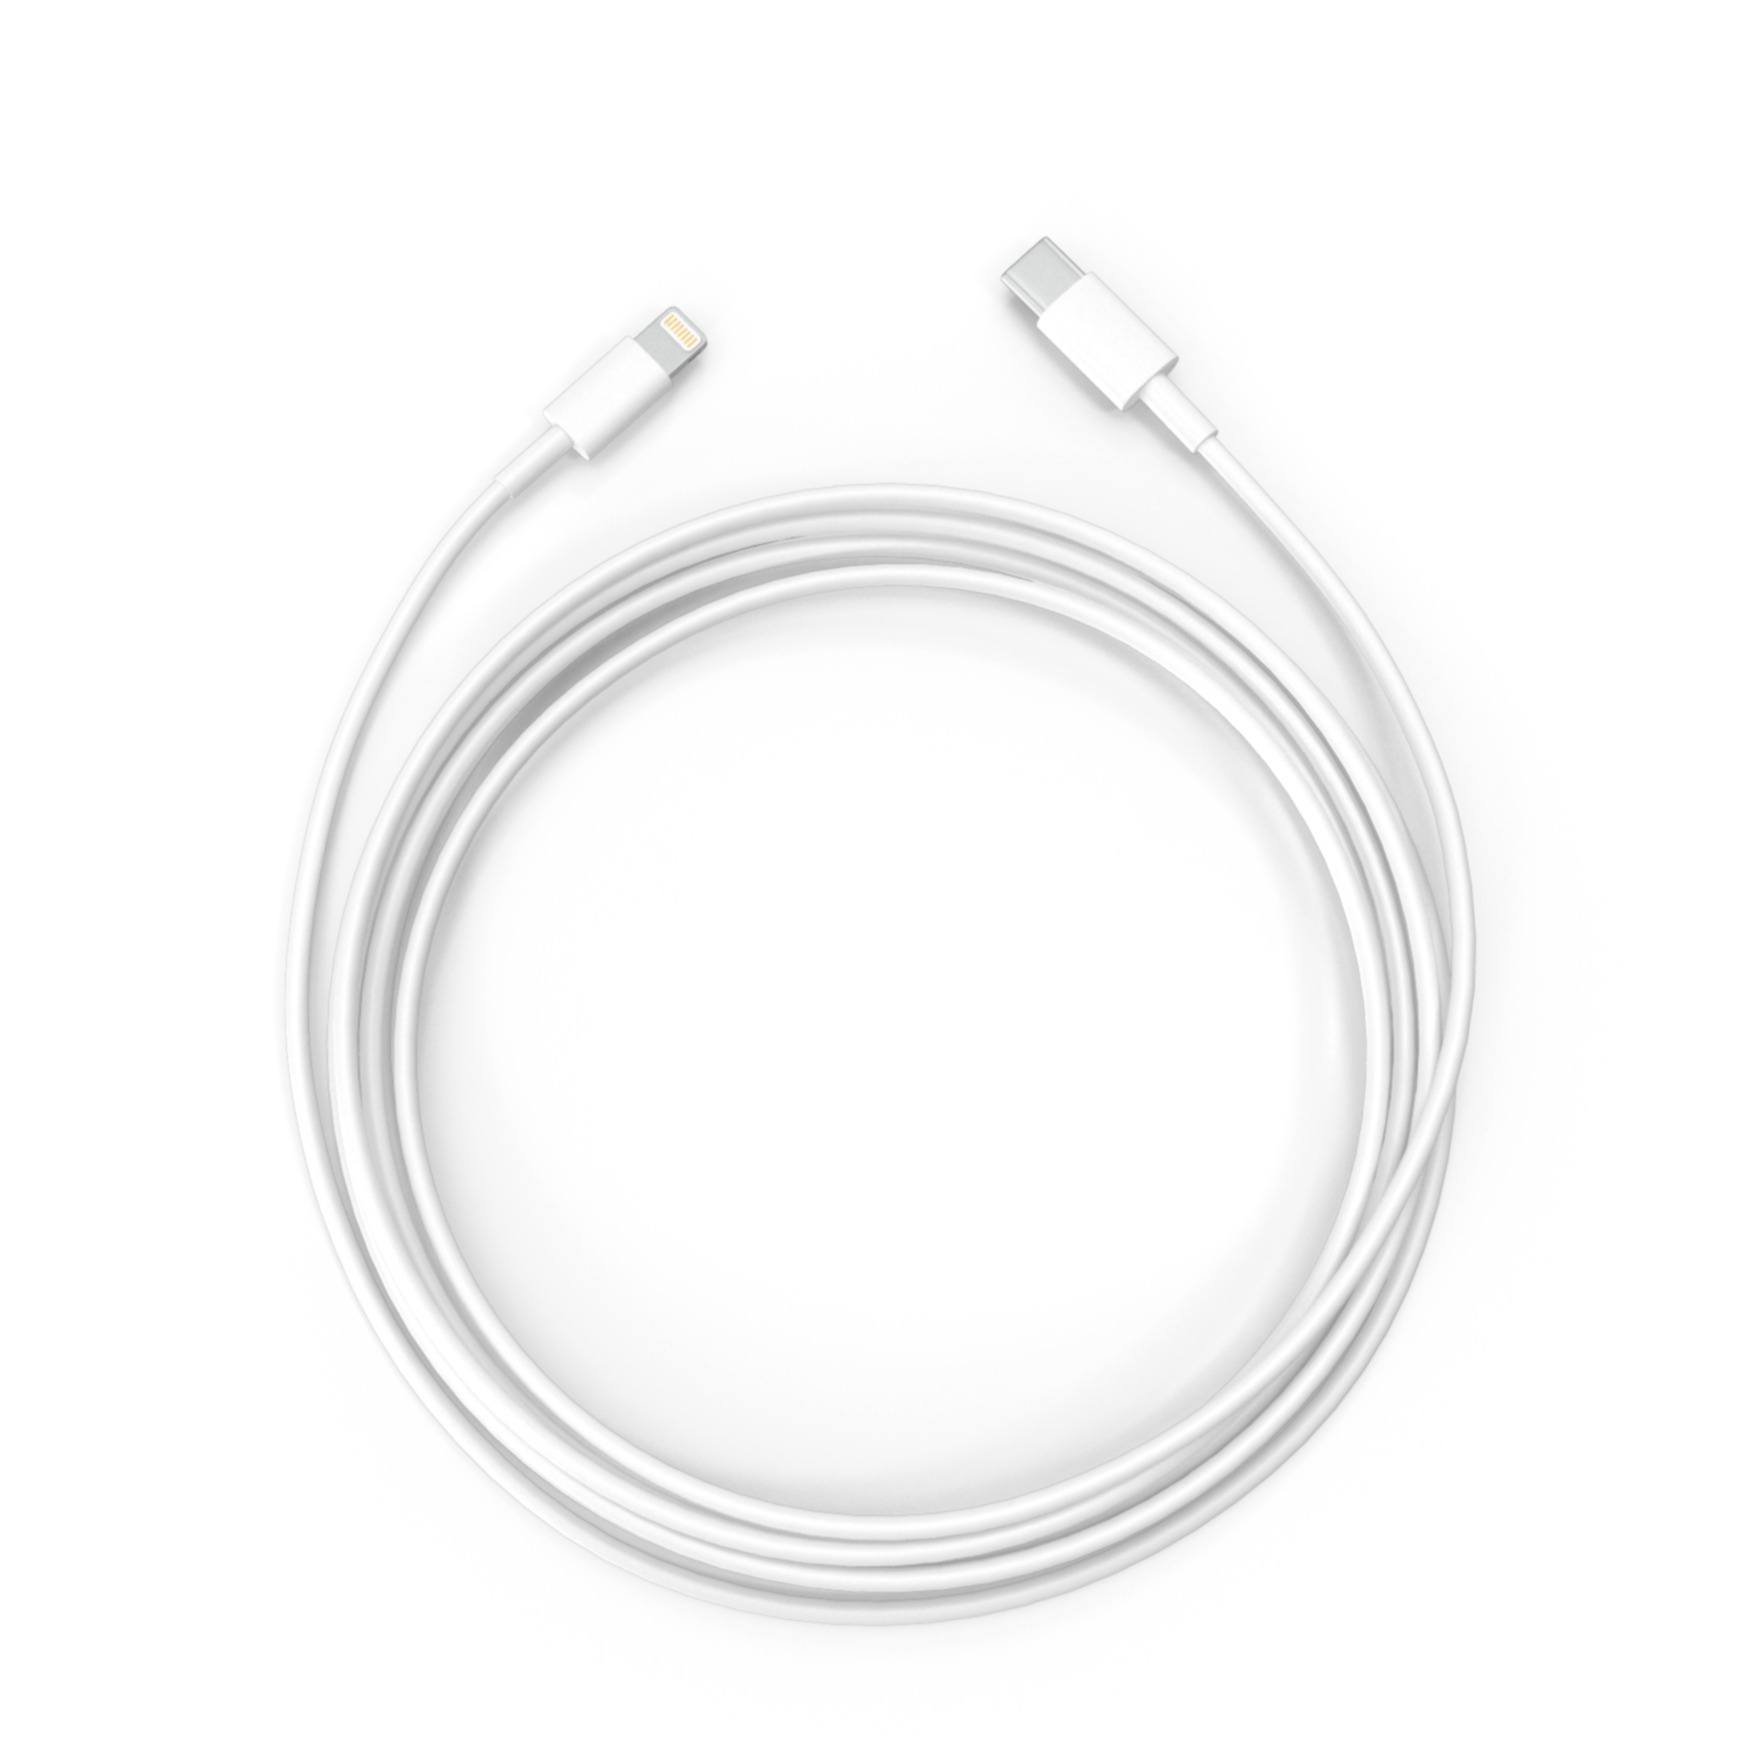 Image of Apple - (1m) iPhone 11 Pro Max Lightning auf USB C Ladekabel Datenkabel MK0X2ZM/A - Weiss bei Apfelkiste.ch